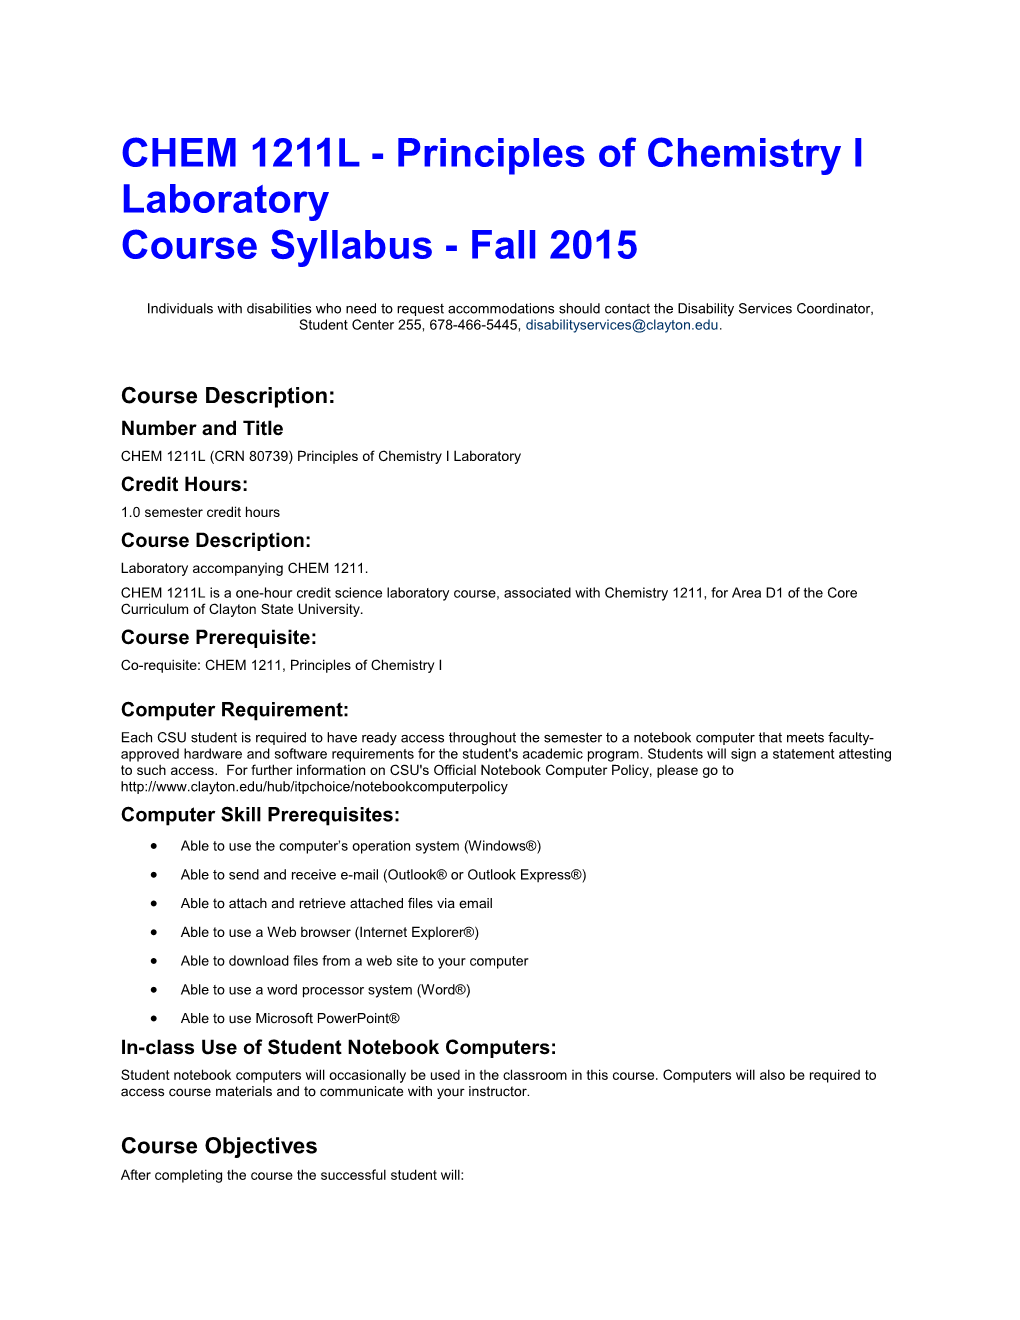 CHEM 1211L - Principles of Chemistry I Laboratory Course Syllabus - Fall 2015